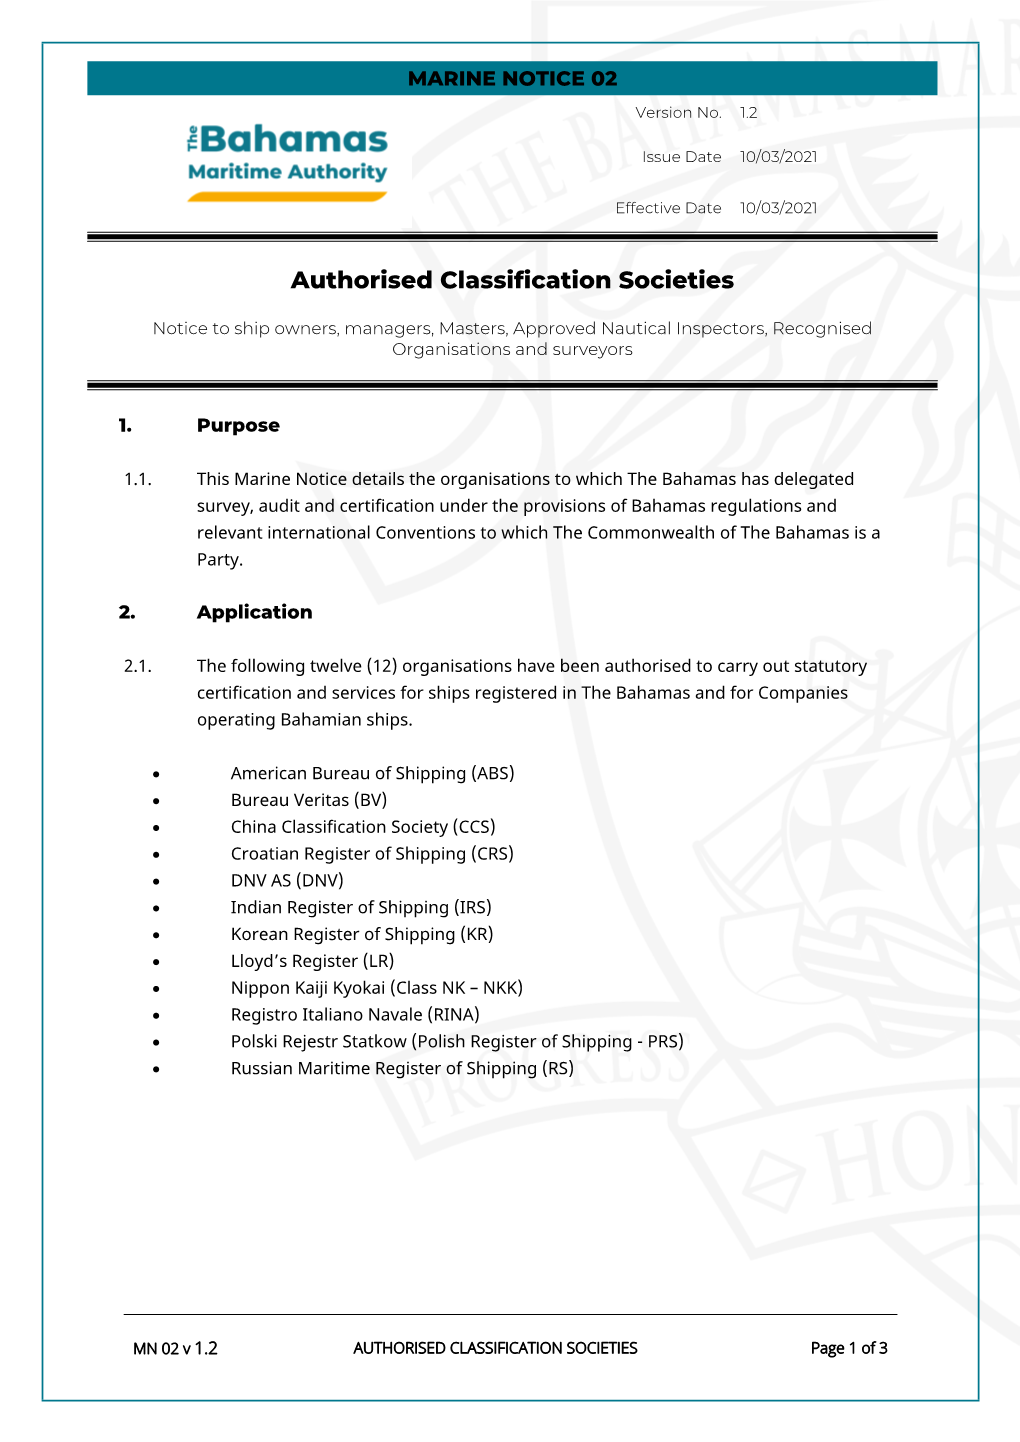 Authorised Classification Societies